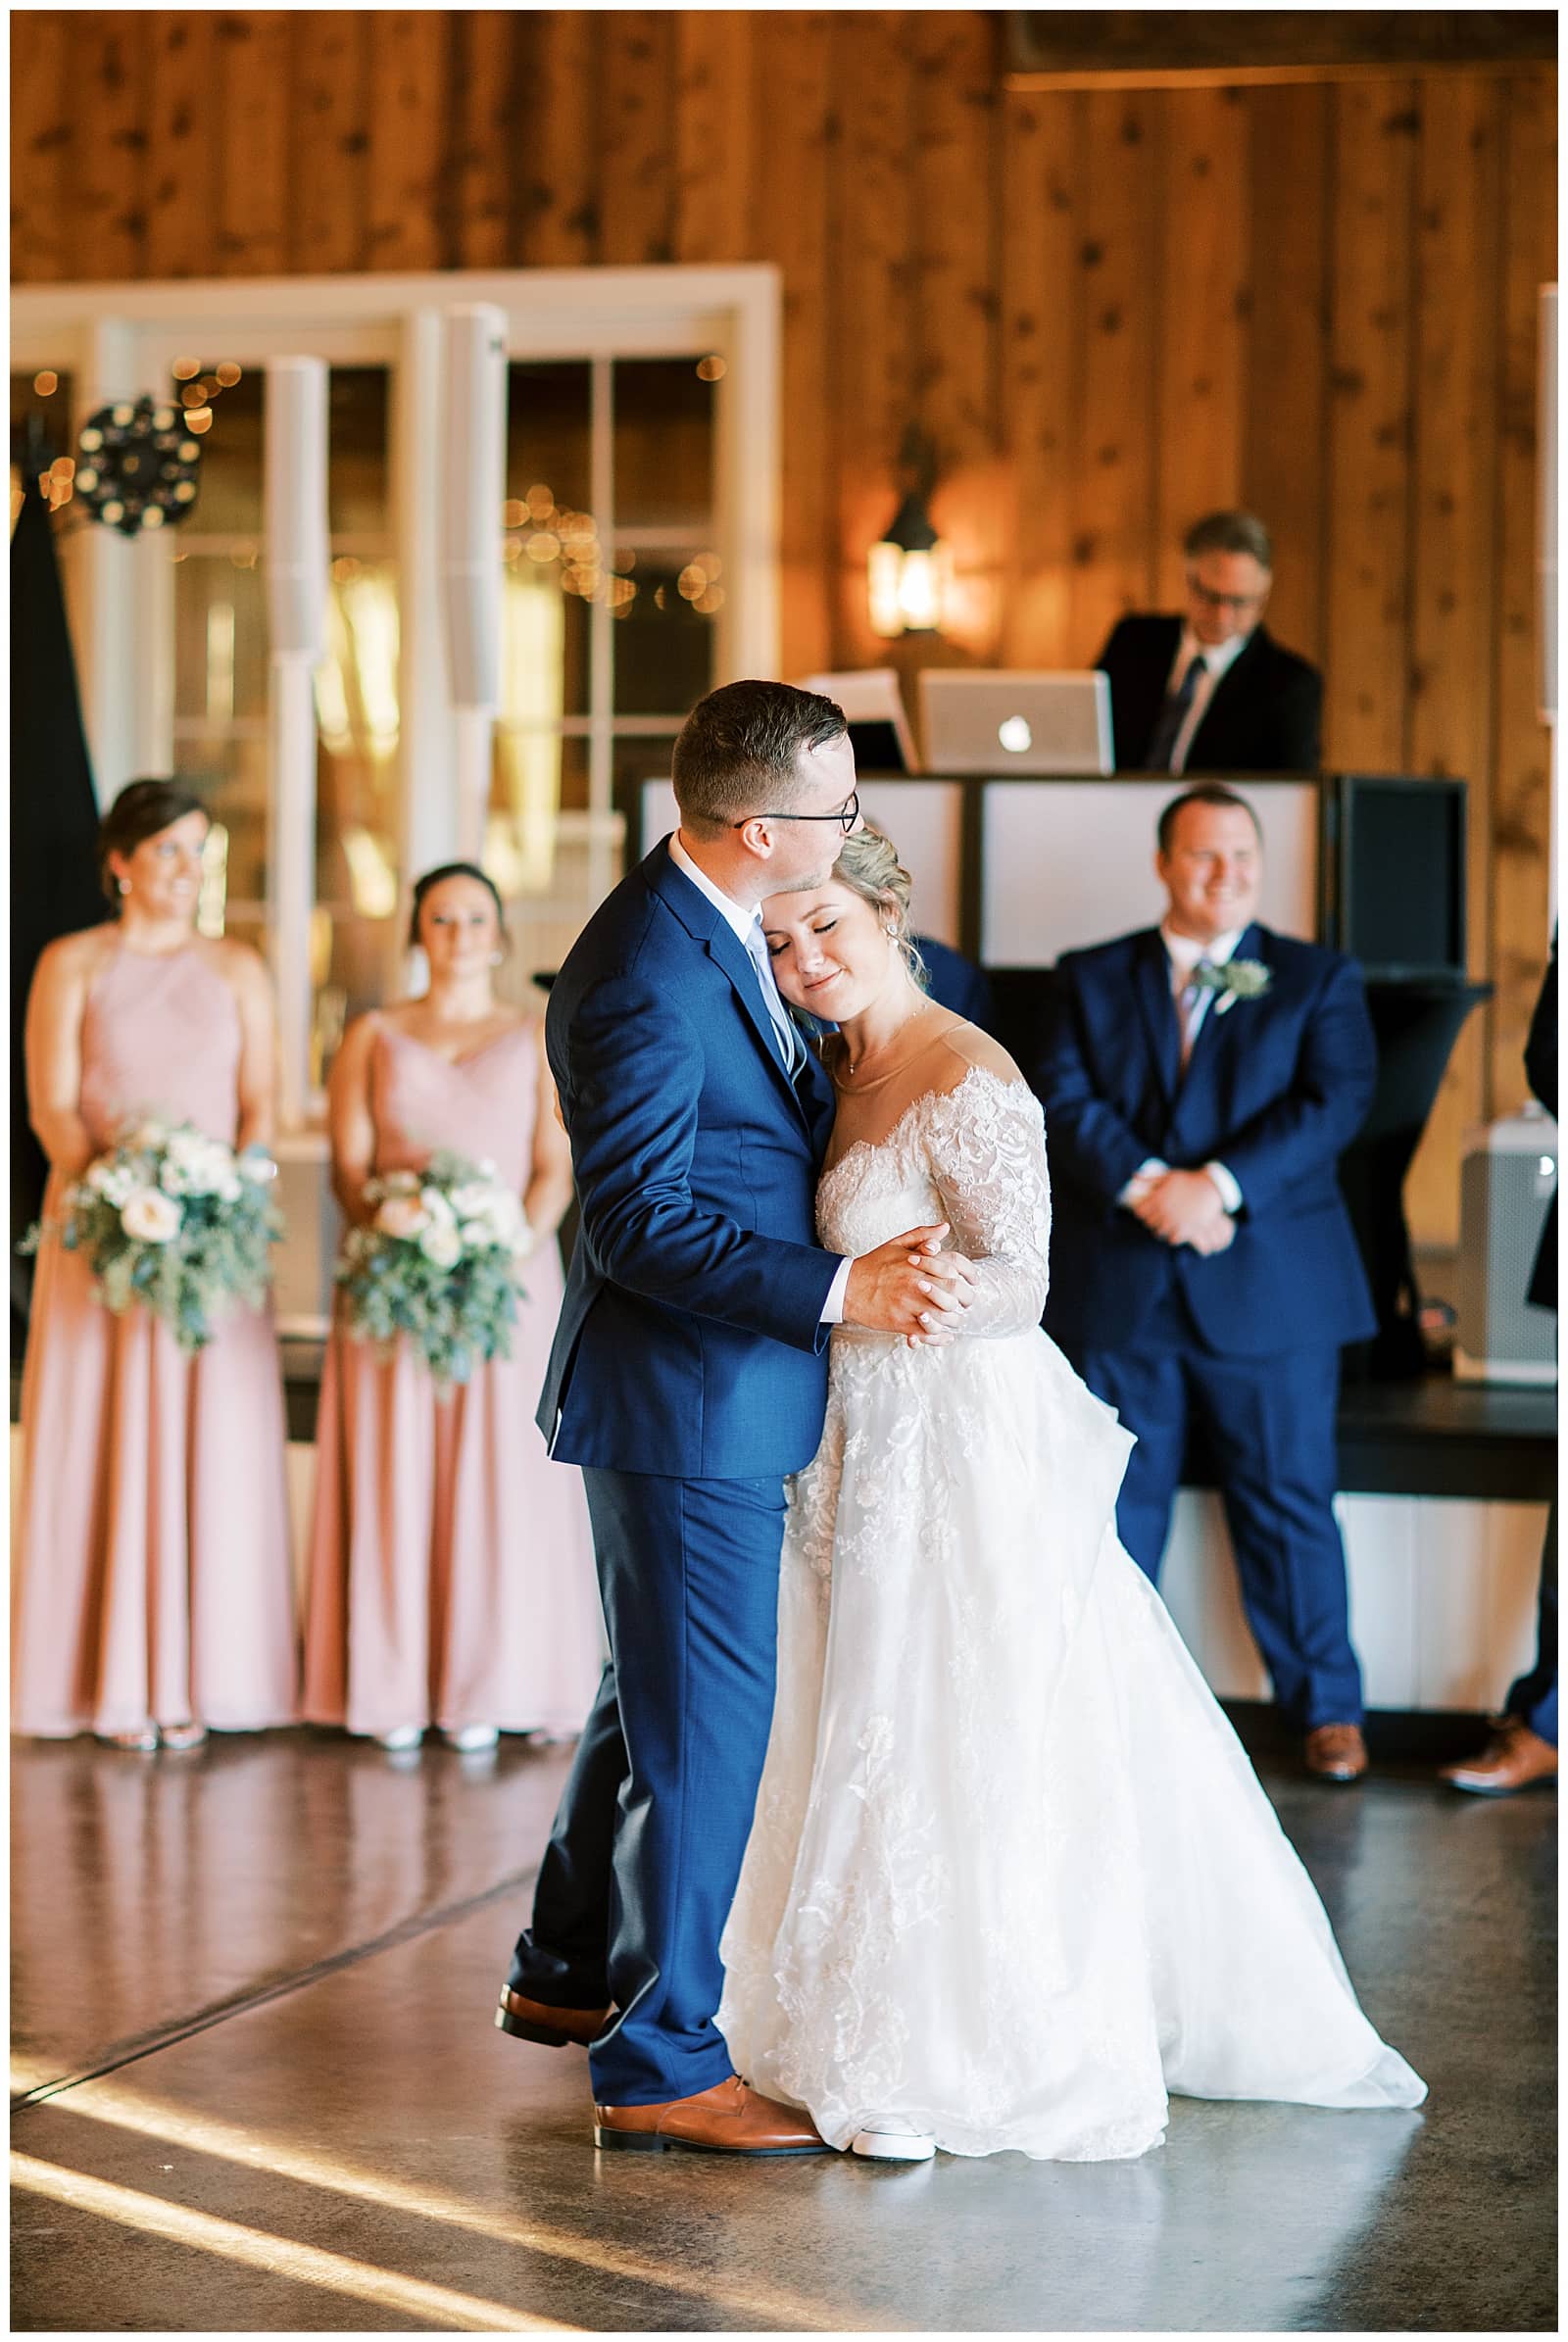 Danielle-Defayette-Photography-Castle-Hill-Cider-Charlottesville-Wedding-2020_0053.jpg